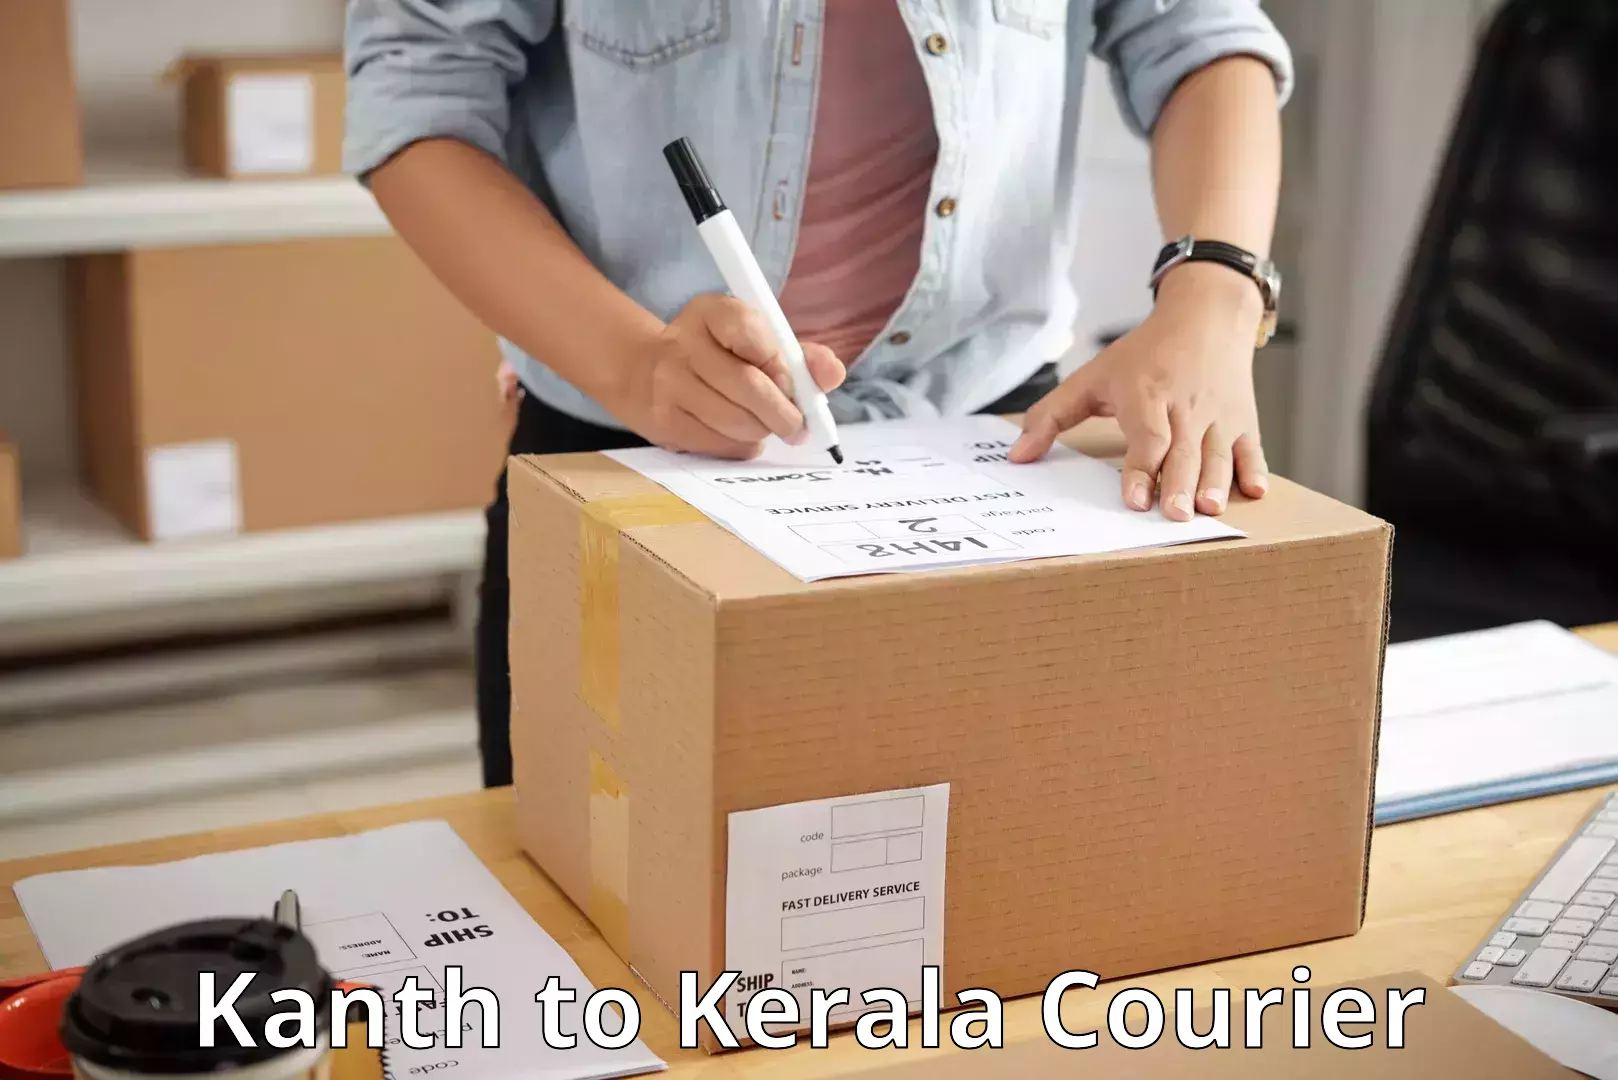 Customer-centric shipping Kanth to Kollam